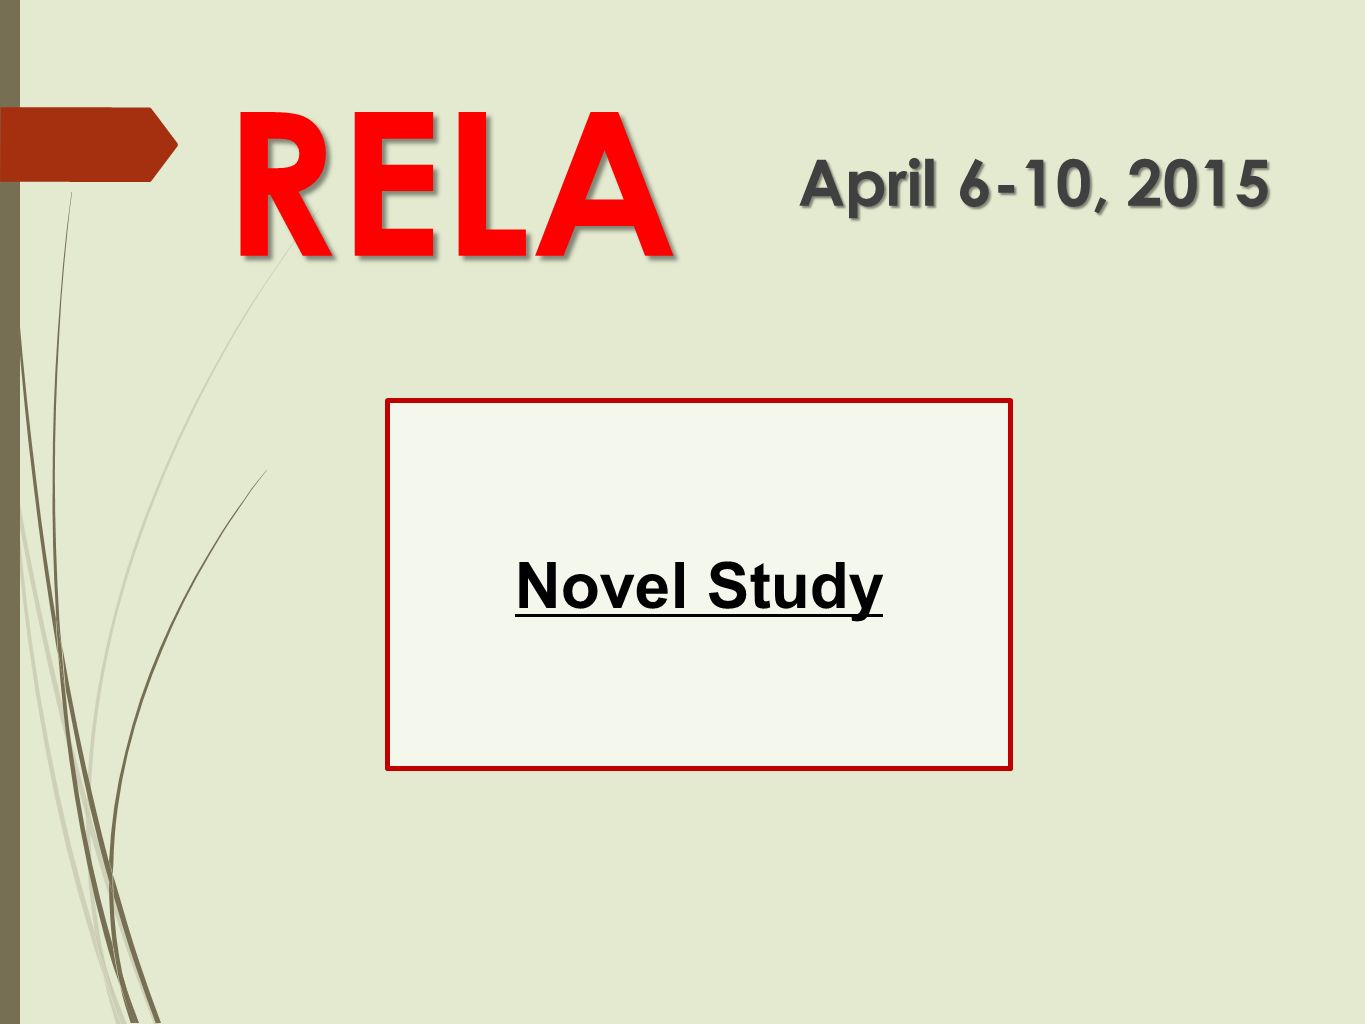 Novel Study RELA April 6-10, 2015